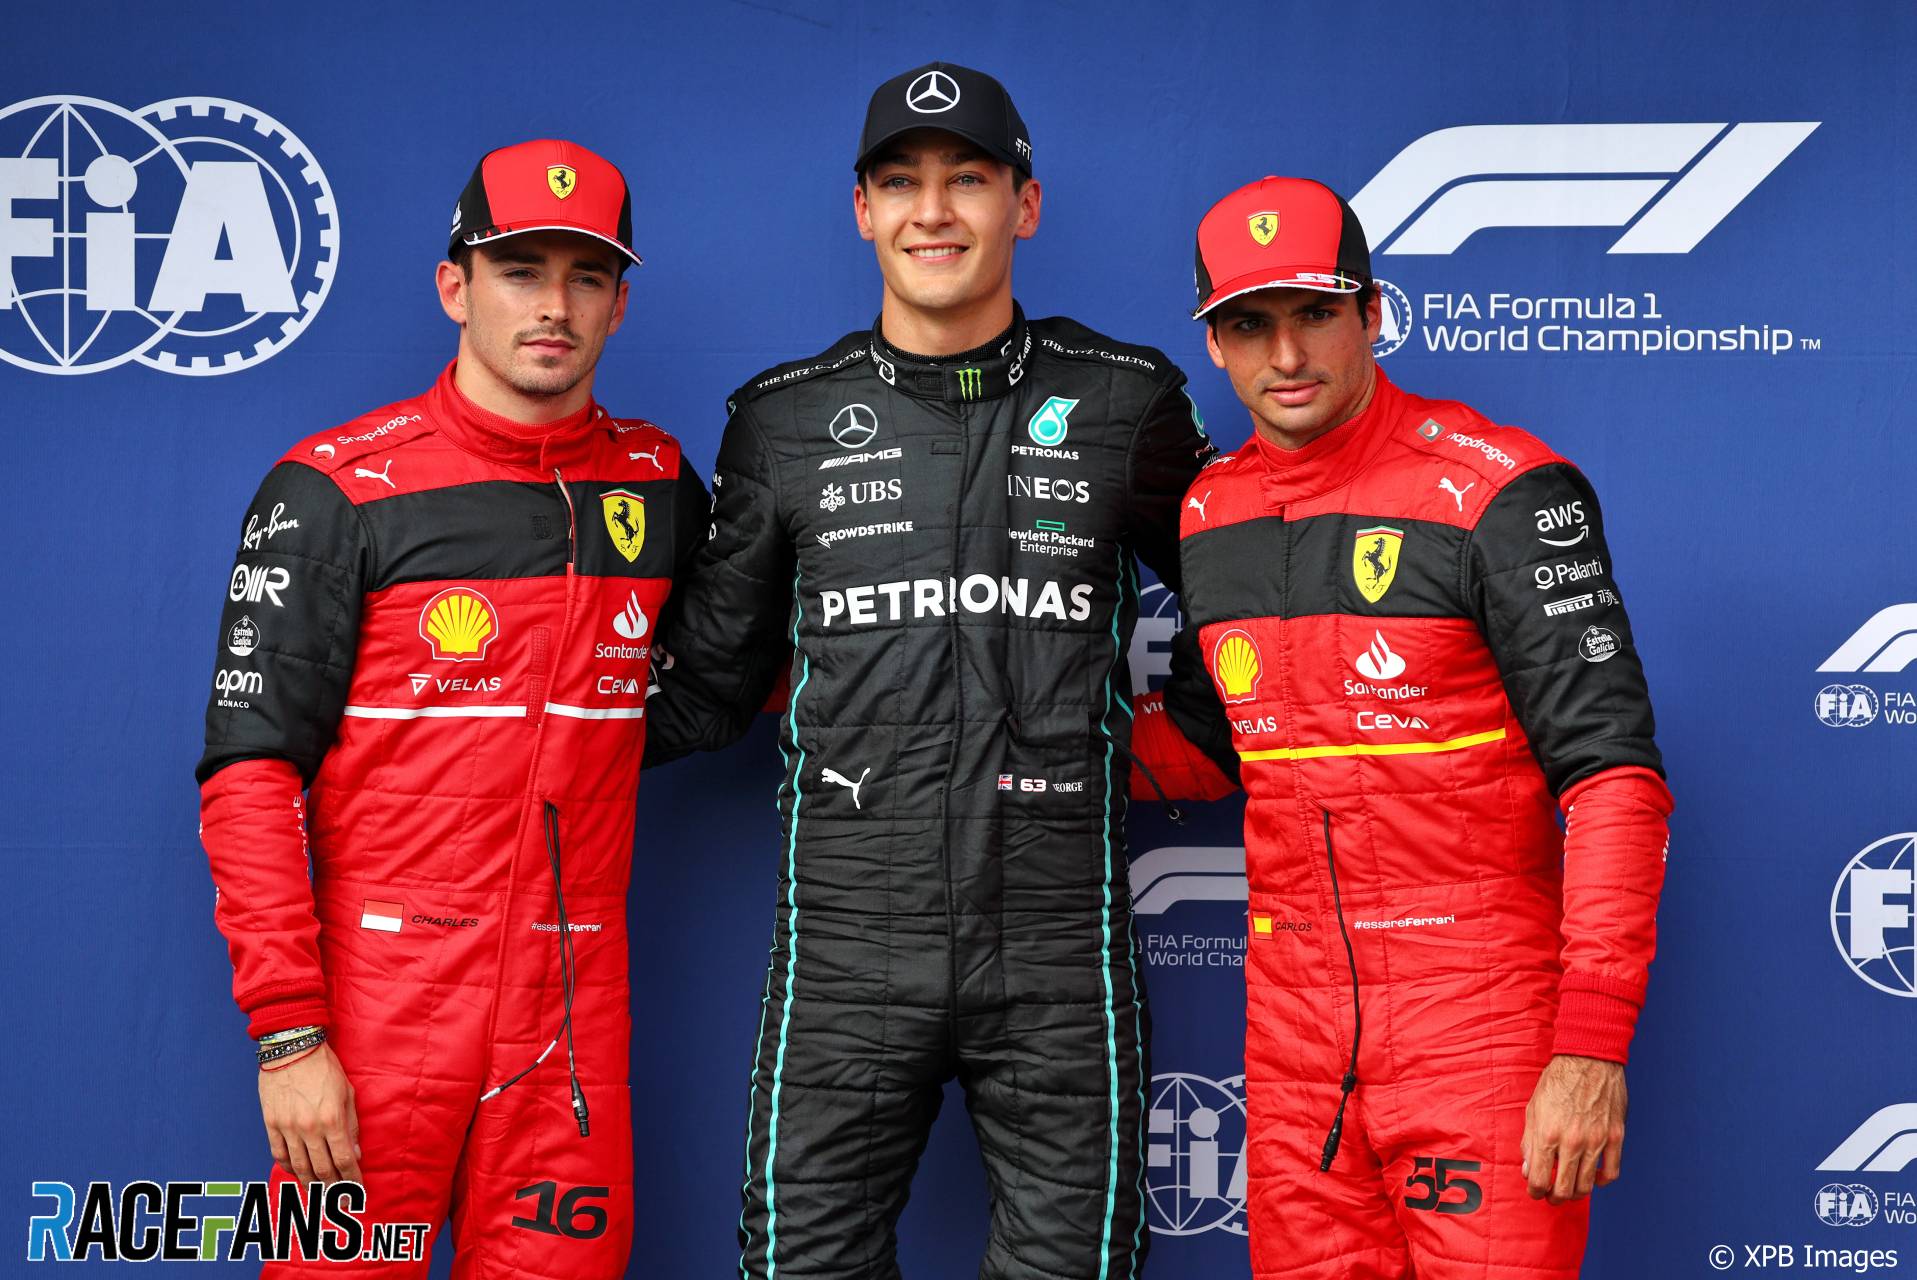 The Top Three Qualifiers : Third Place Charles Leclerc (Scuderia Ferrari), Pole Position George Russell (Mercedes AMG F1 Team) and Second Place Carlos Sainz Jr. (Scuderia Ferrari)